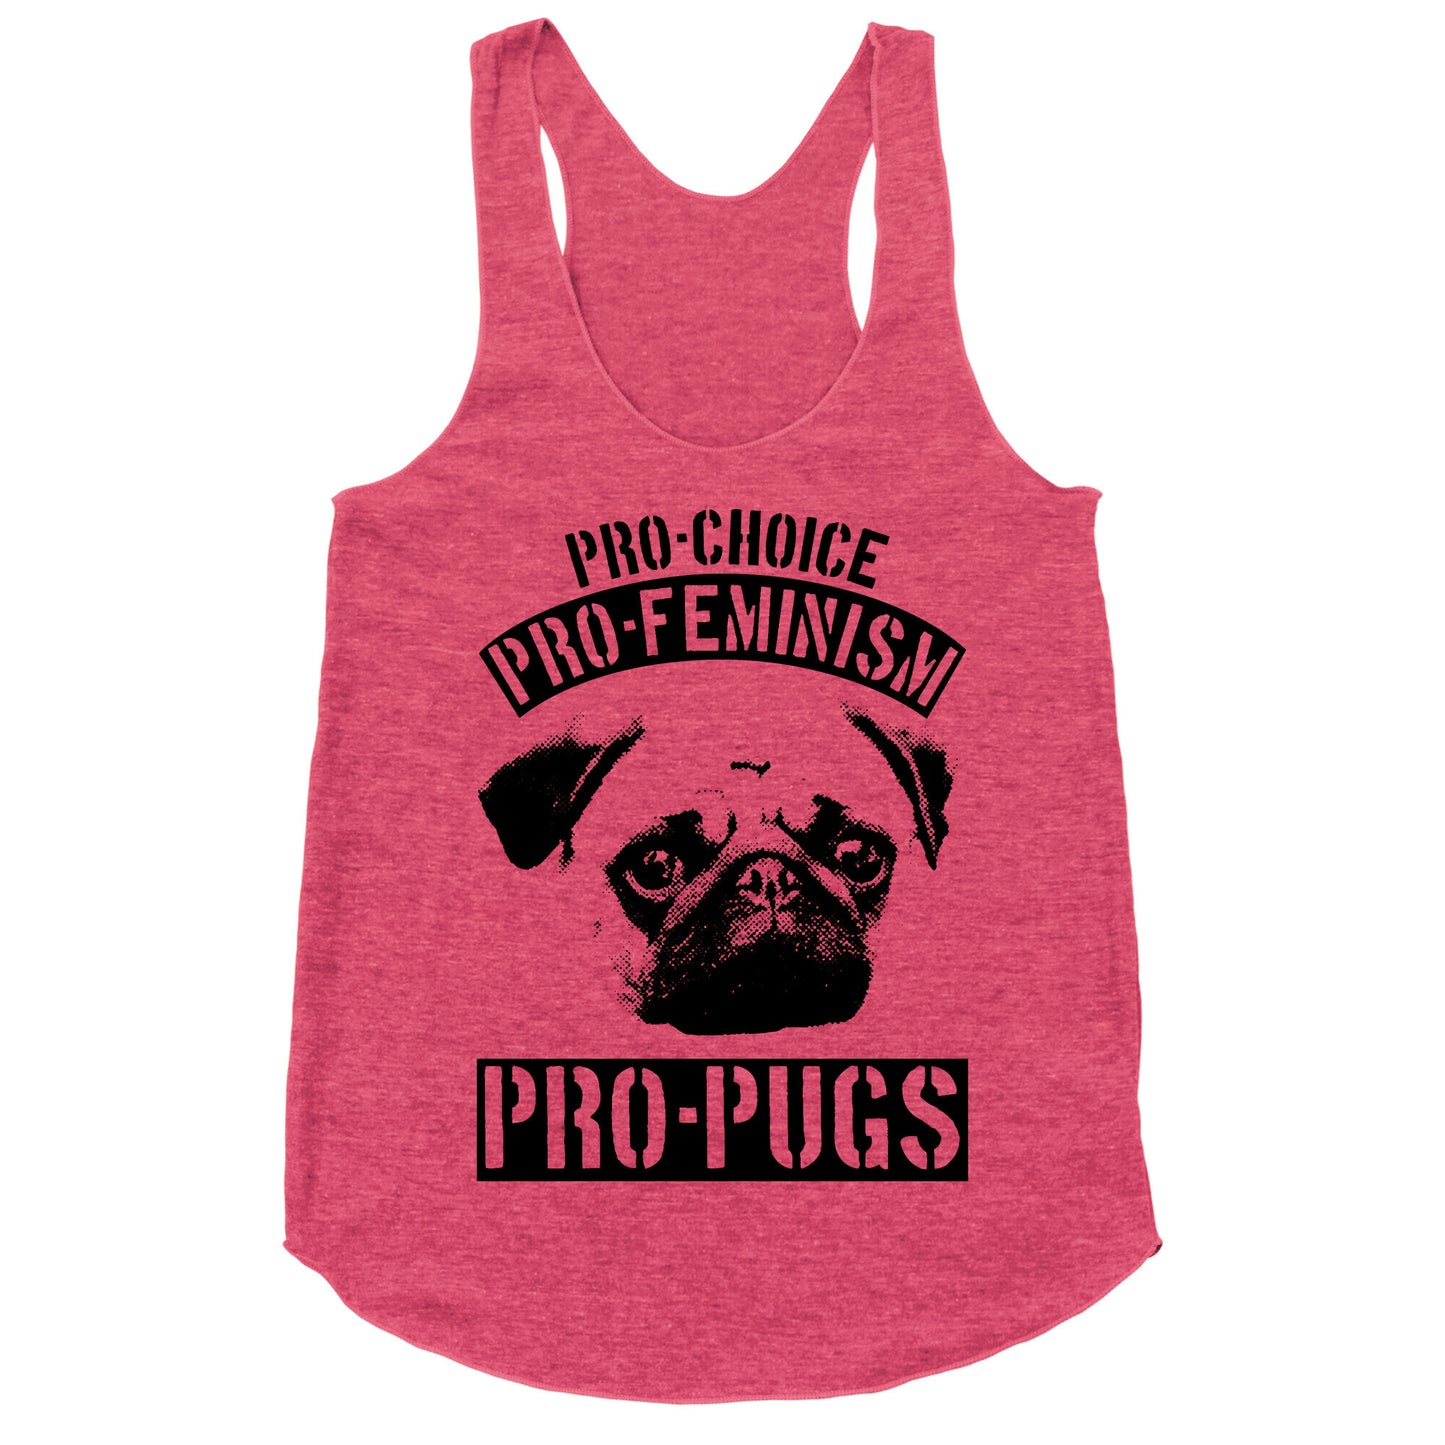 Pro-Choice Pro-Feminism Pro-Pugs Racerback Tank